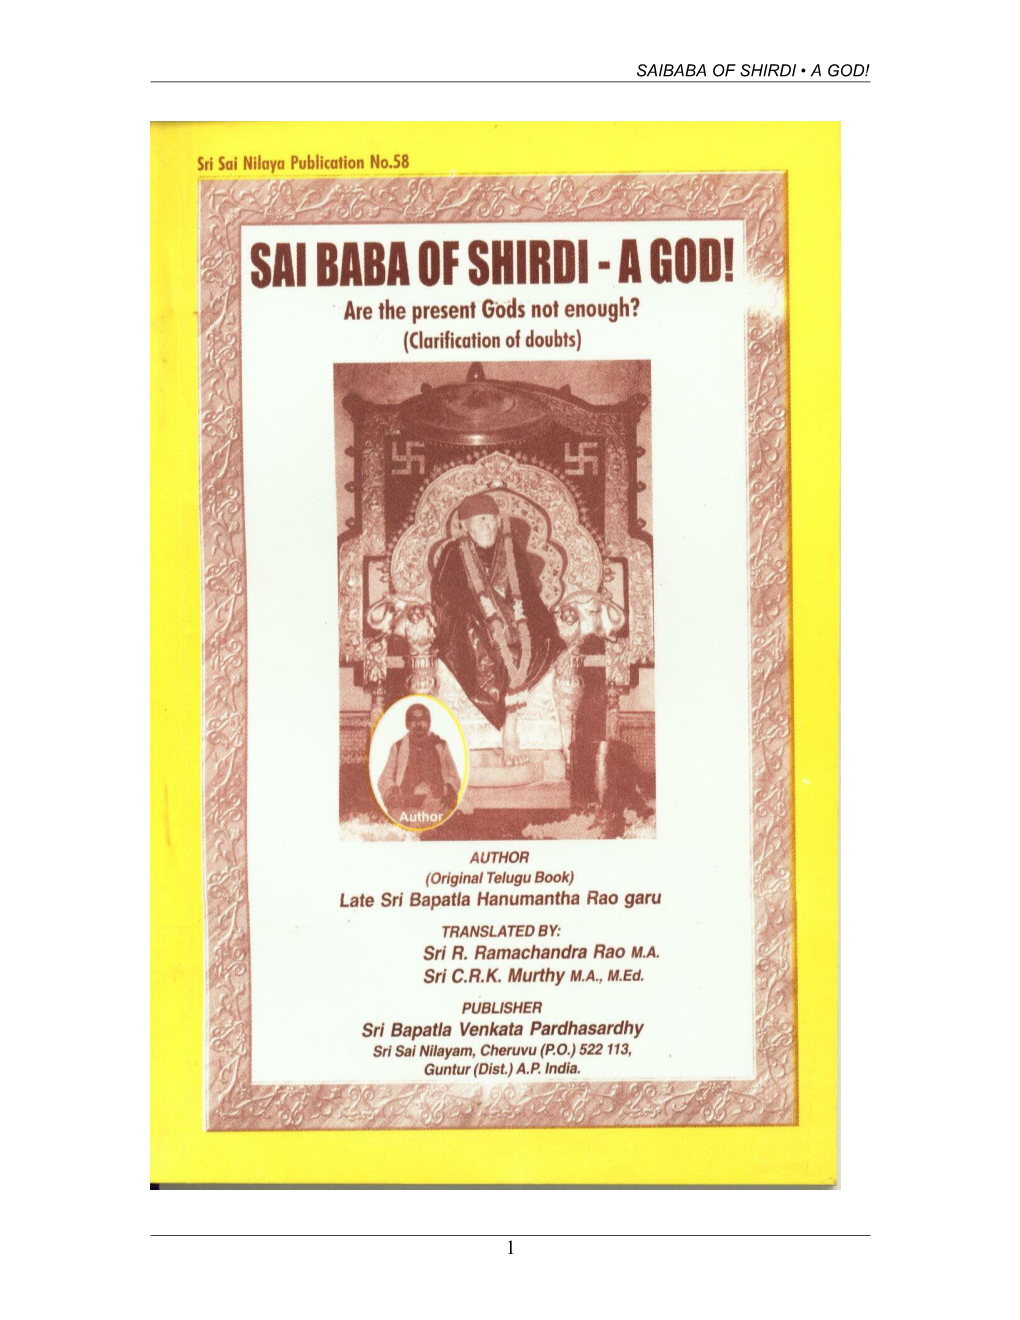 Saibaba of Shirdi - a God